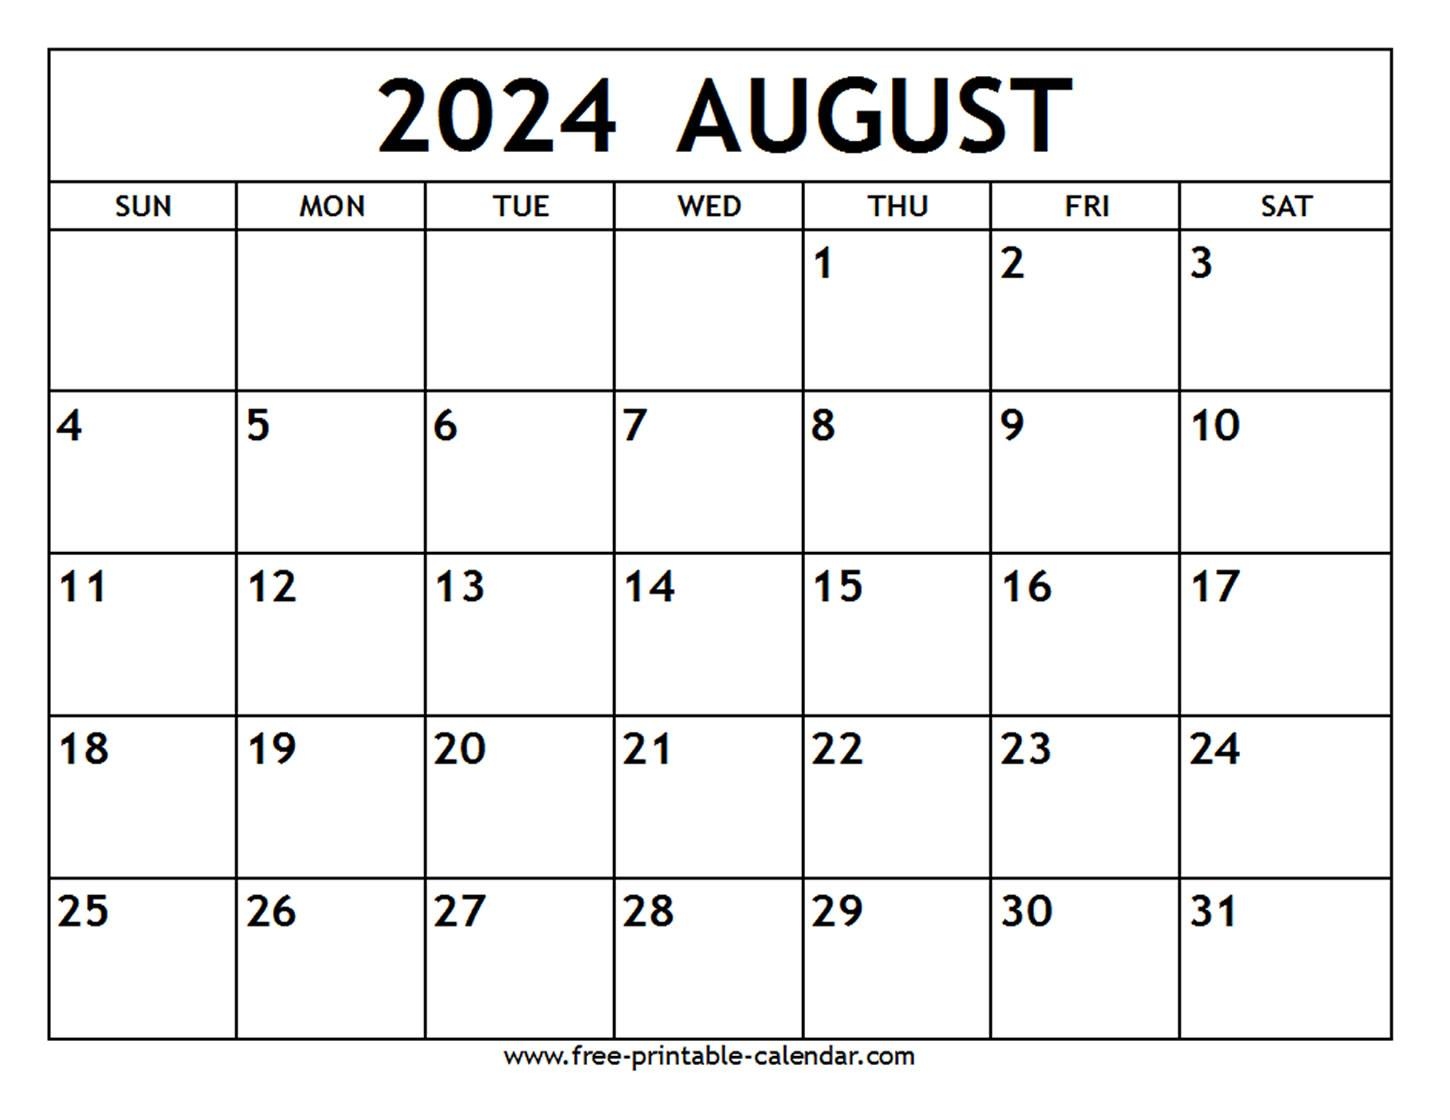 August 2024 Calendar - Free-Printable-Calendar pertaining to Free Printable Calendar August 2024 Uk